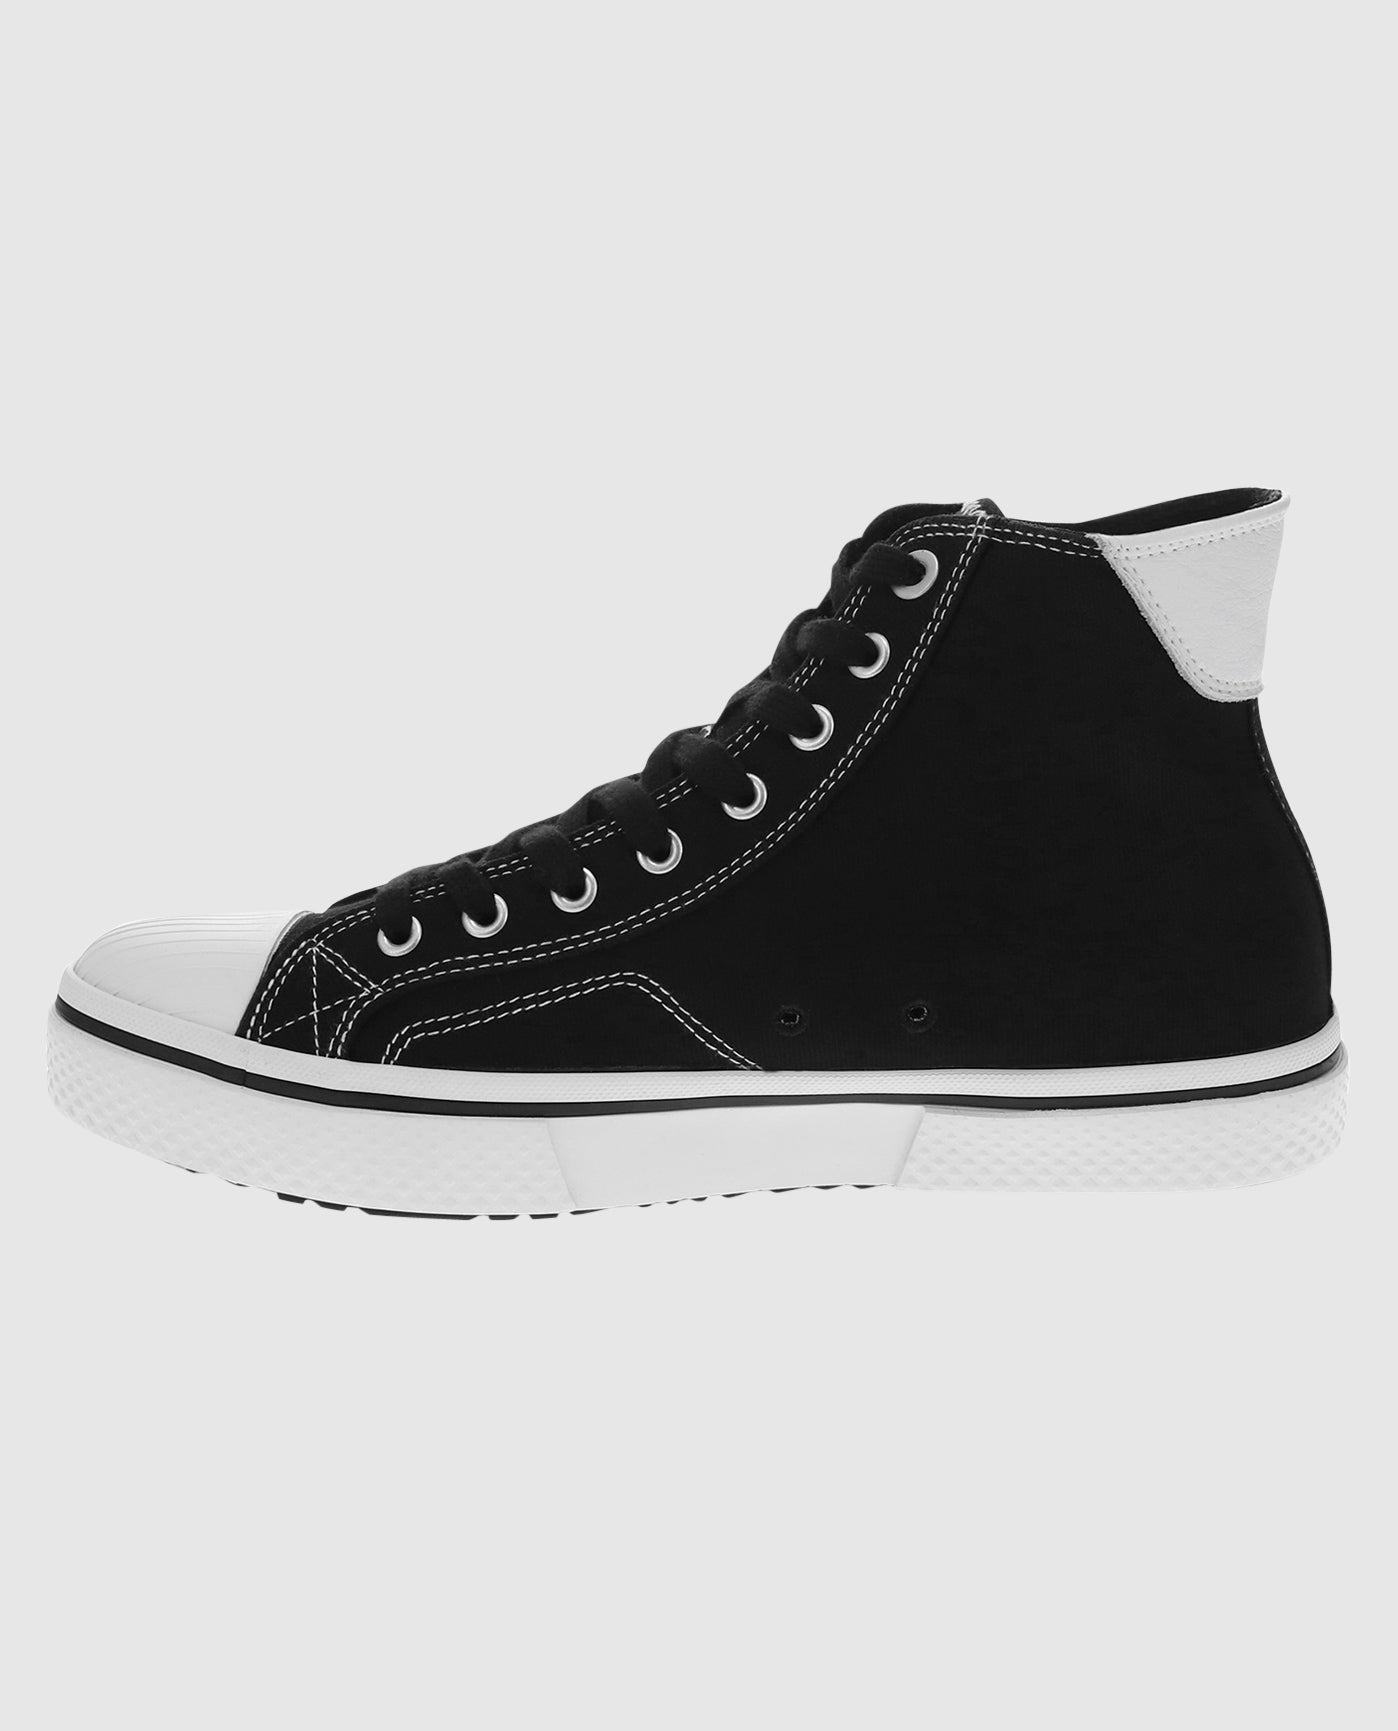 Inside Side View Of Starter Tradition 71 High Black Single Sneaker | Black